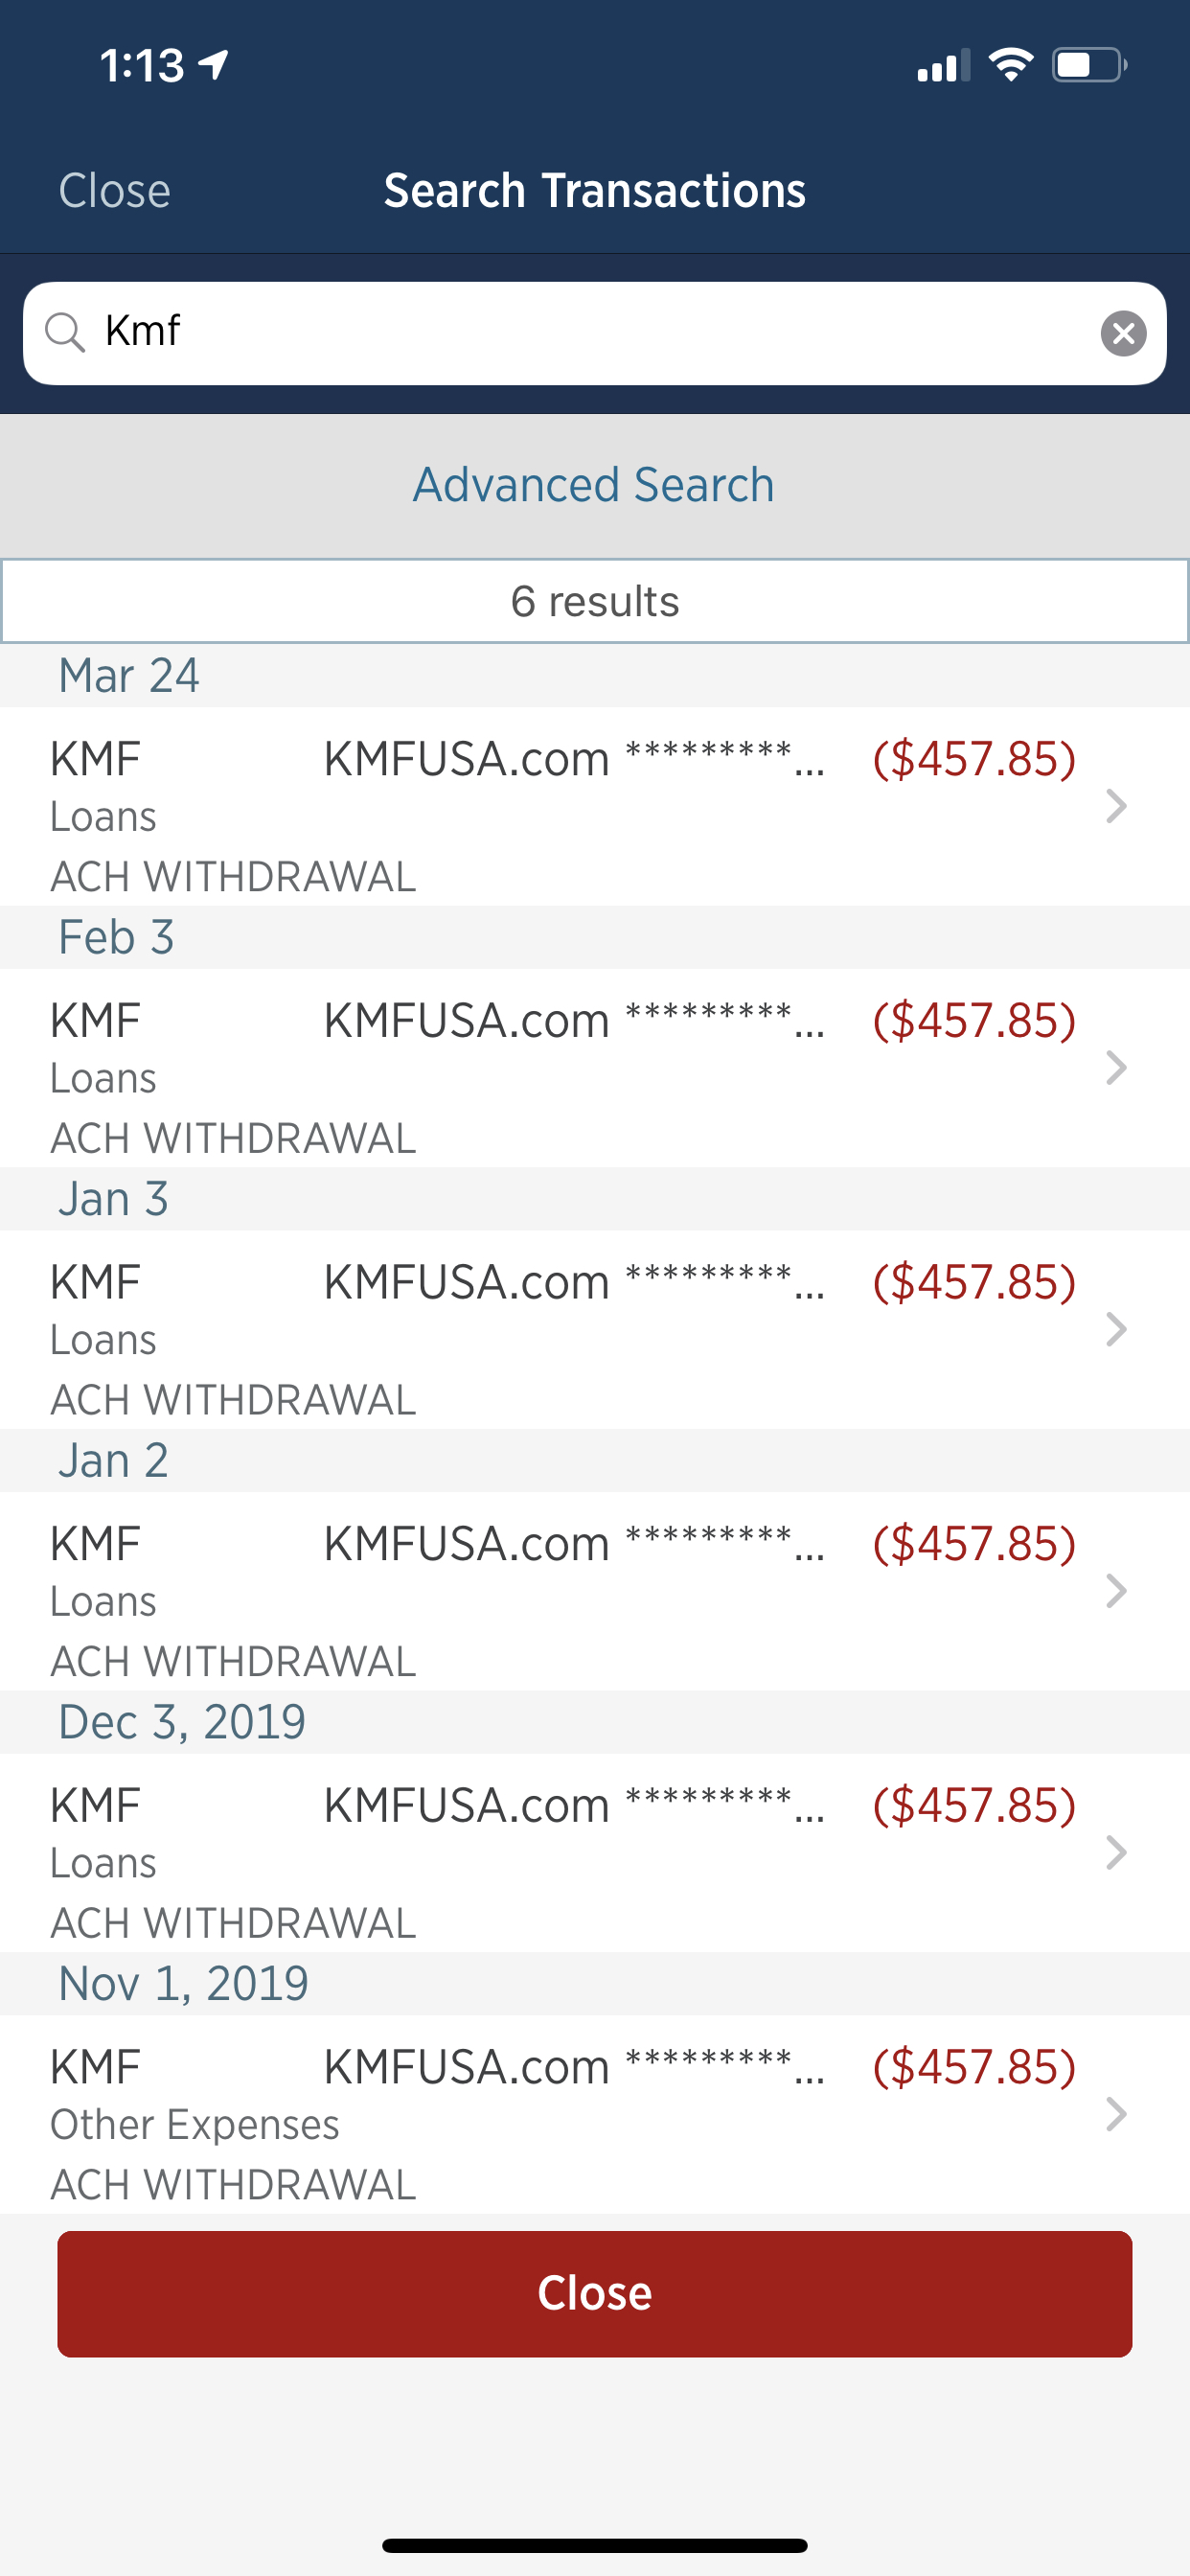 All deposits sent to KMF(Kia Motor Finance)